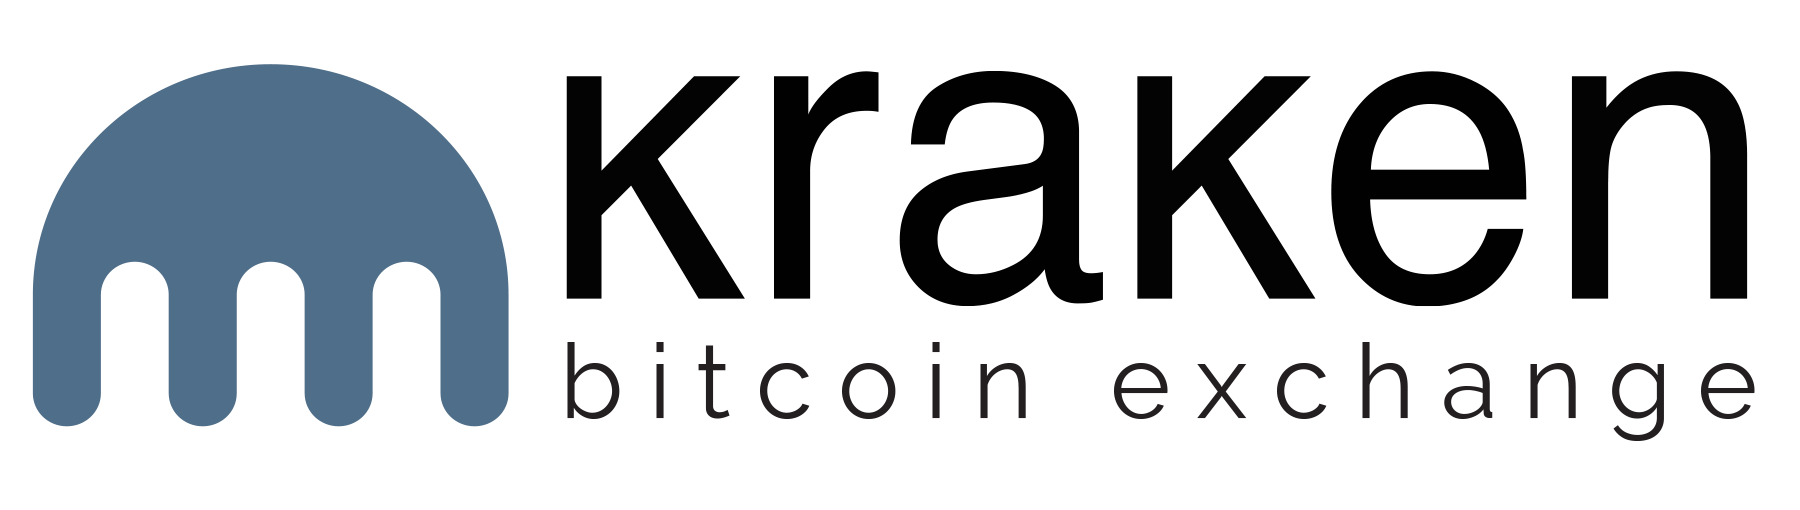 Exchange Kraken Bitcoin Cryptocurrency Ethereum Tether PNG Image